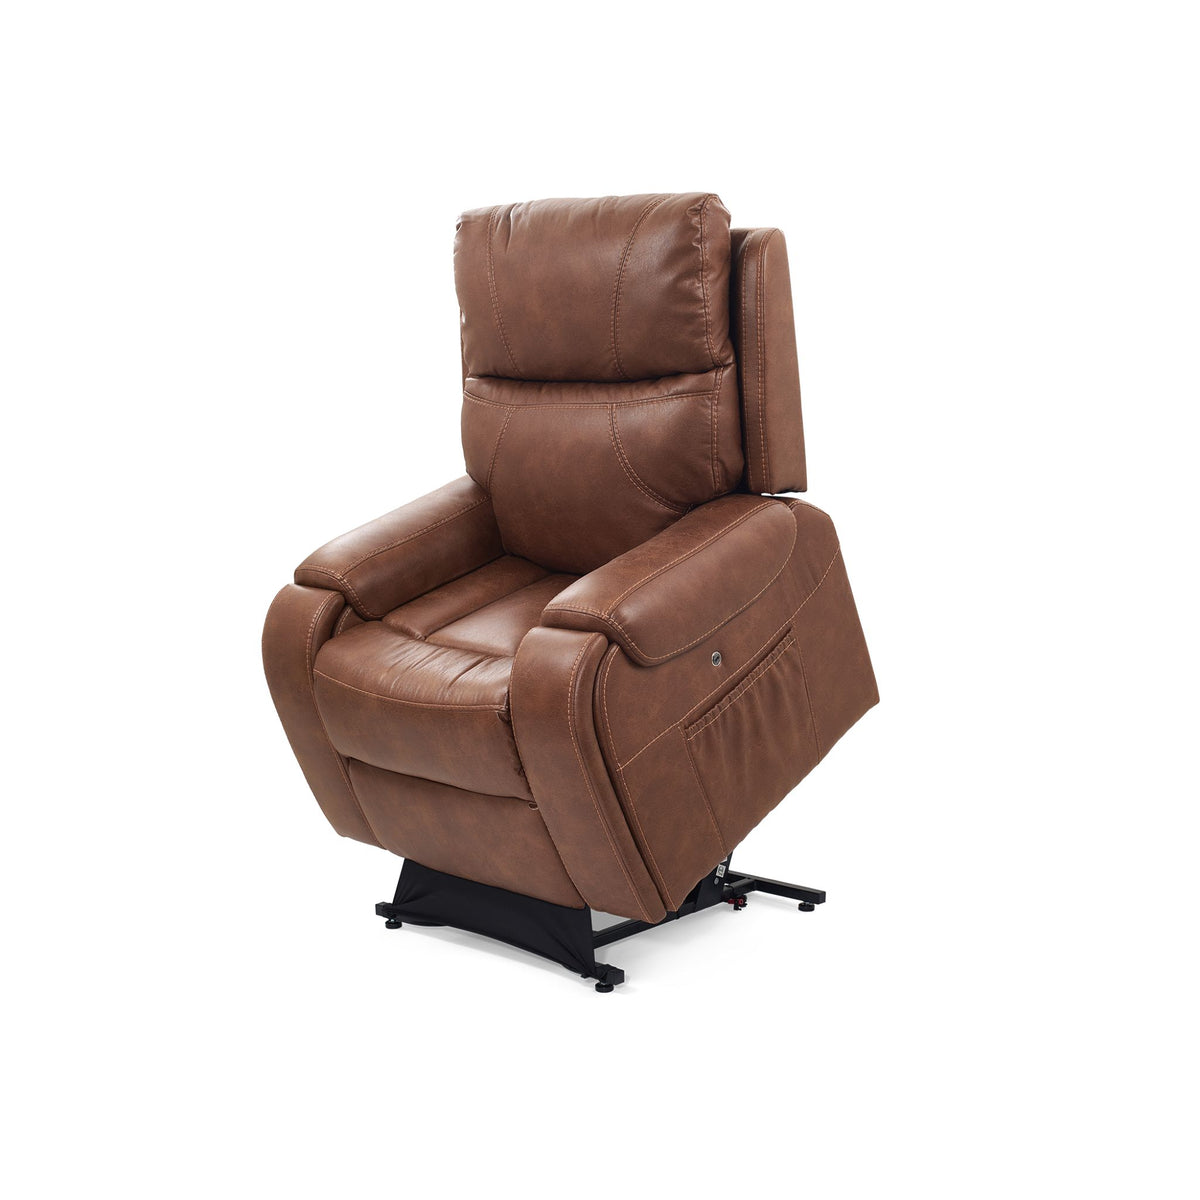 UltraComfort Sedona Power Lift Chair Recliner